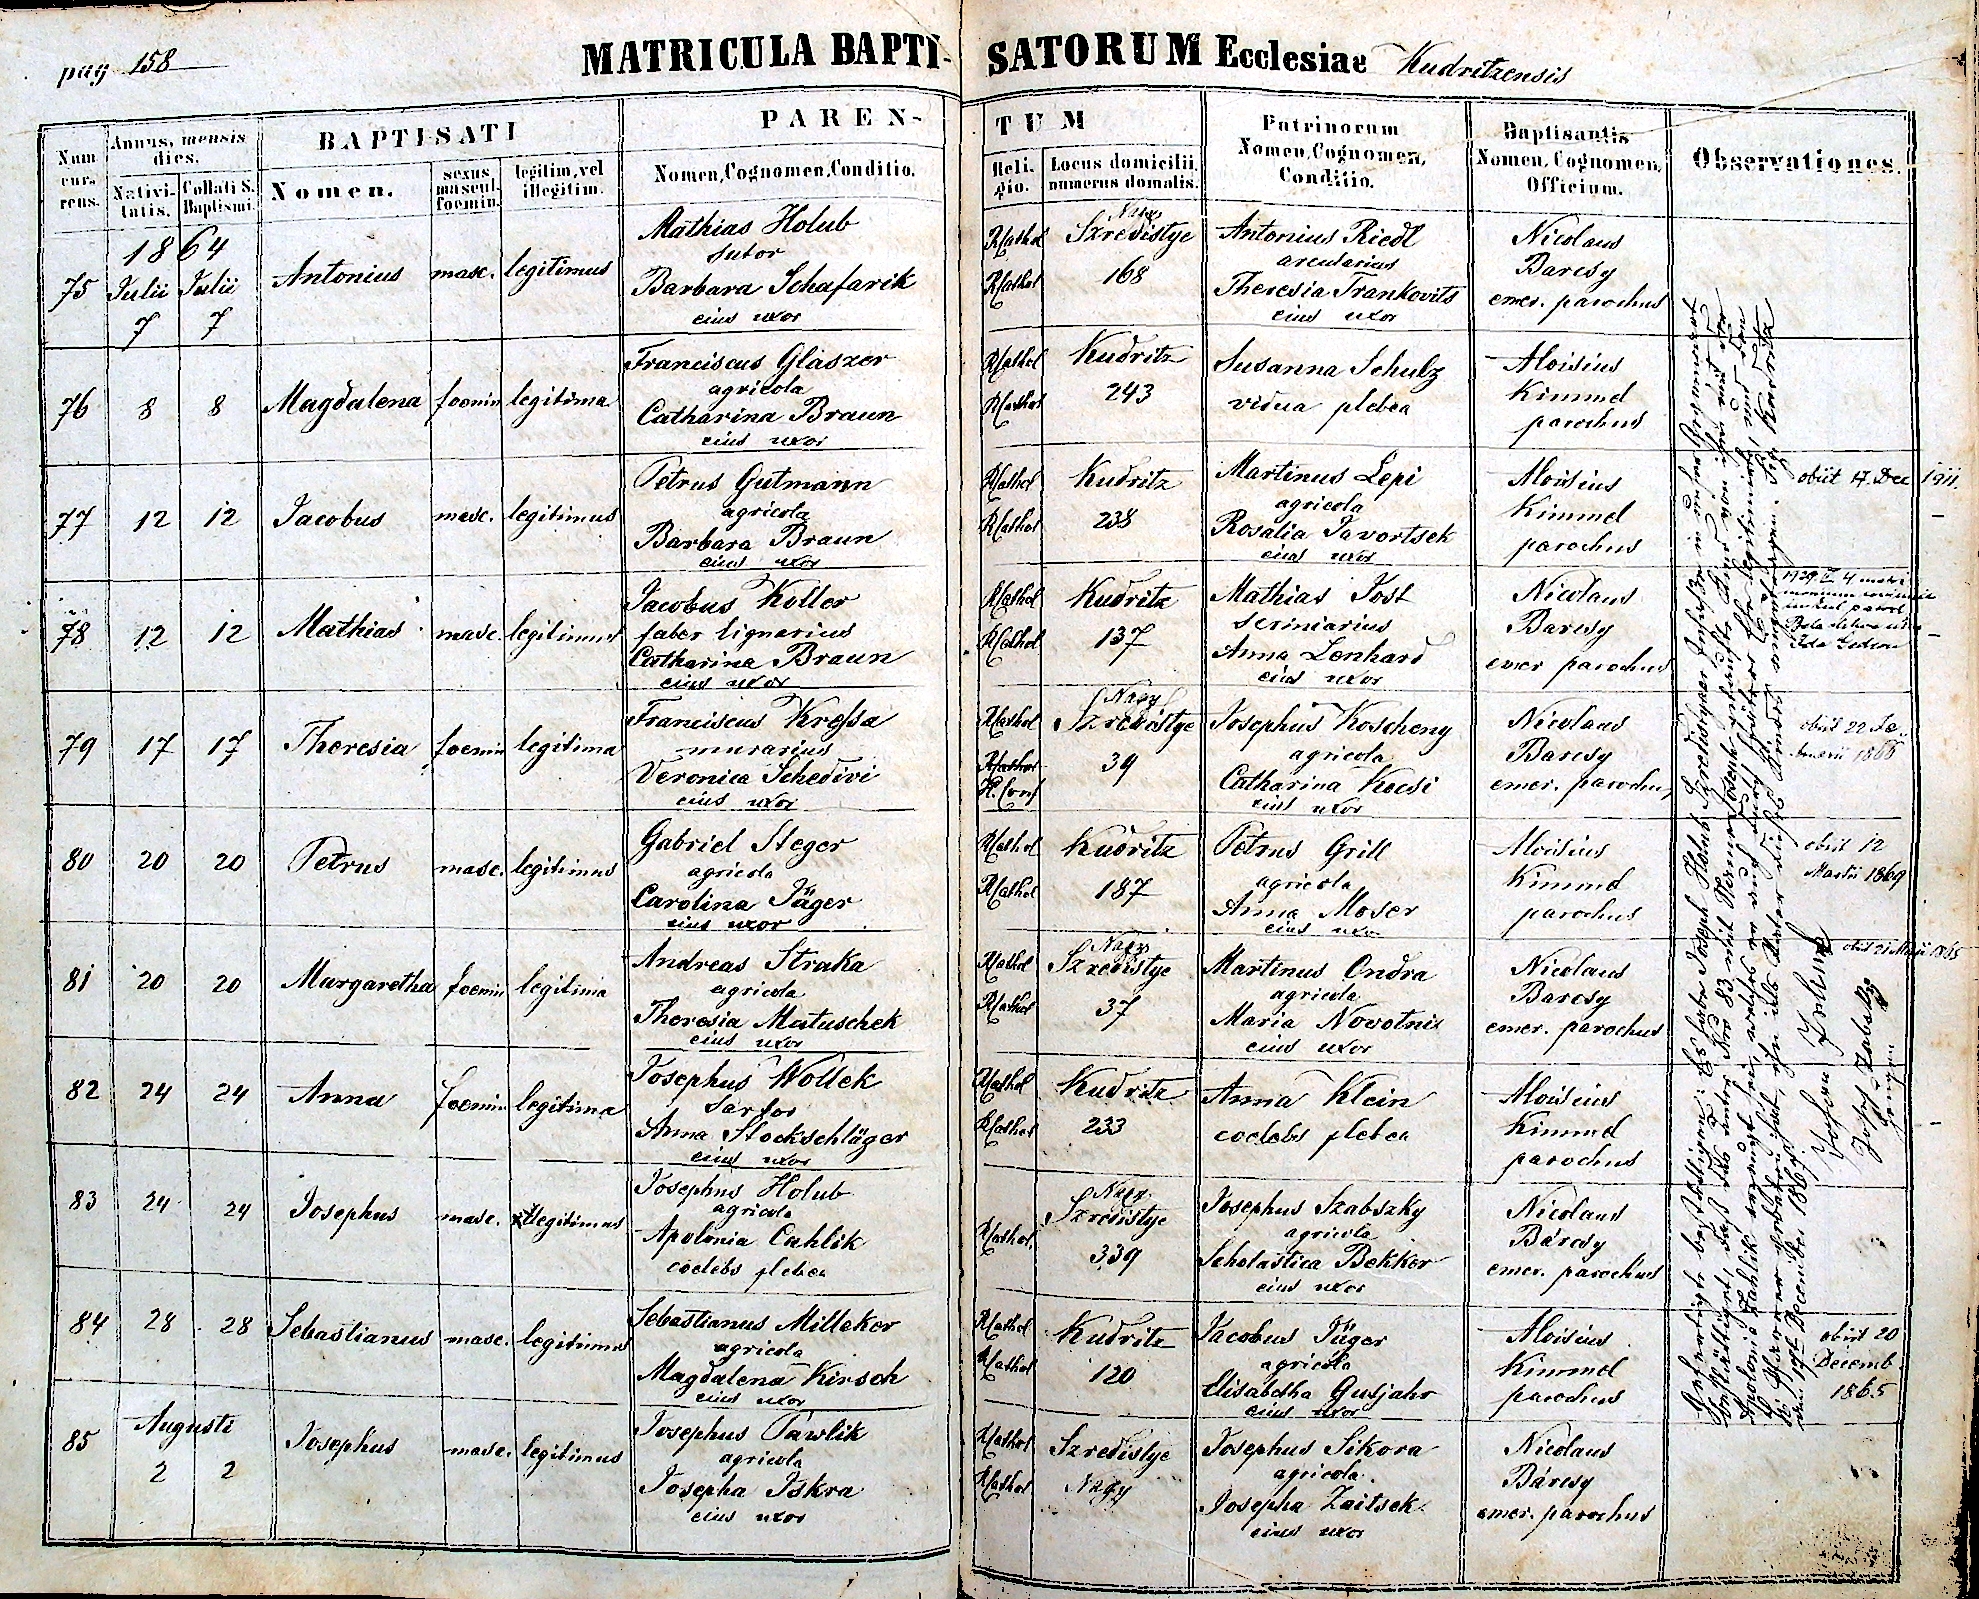 images/church_records/BIRTHS/1852-1870B/158